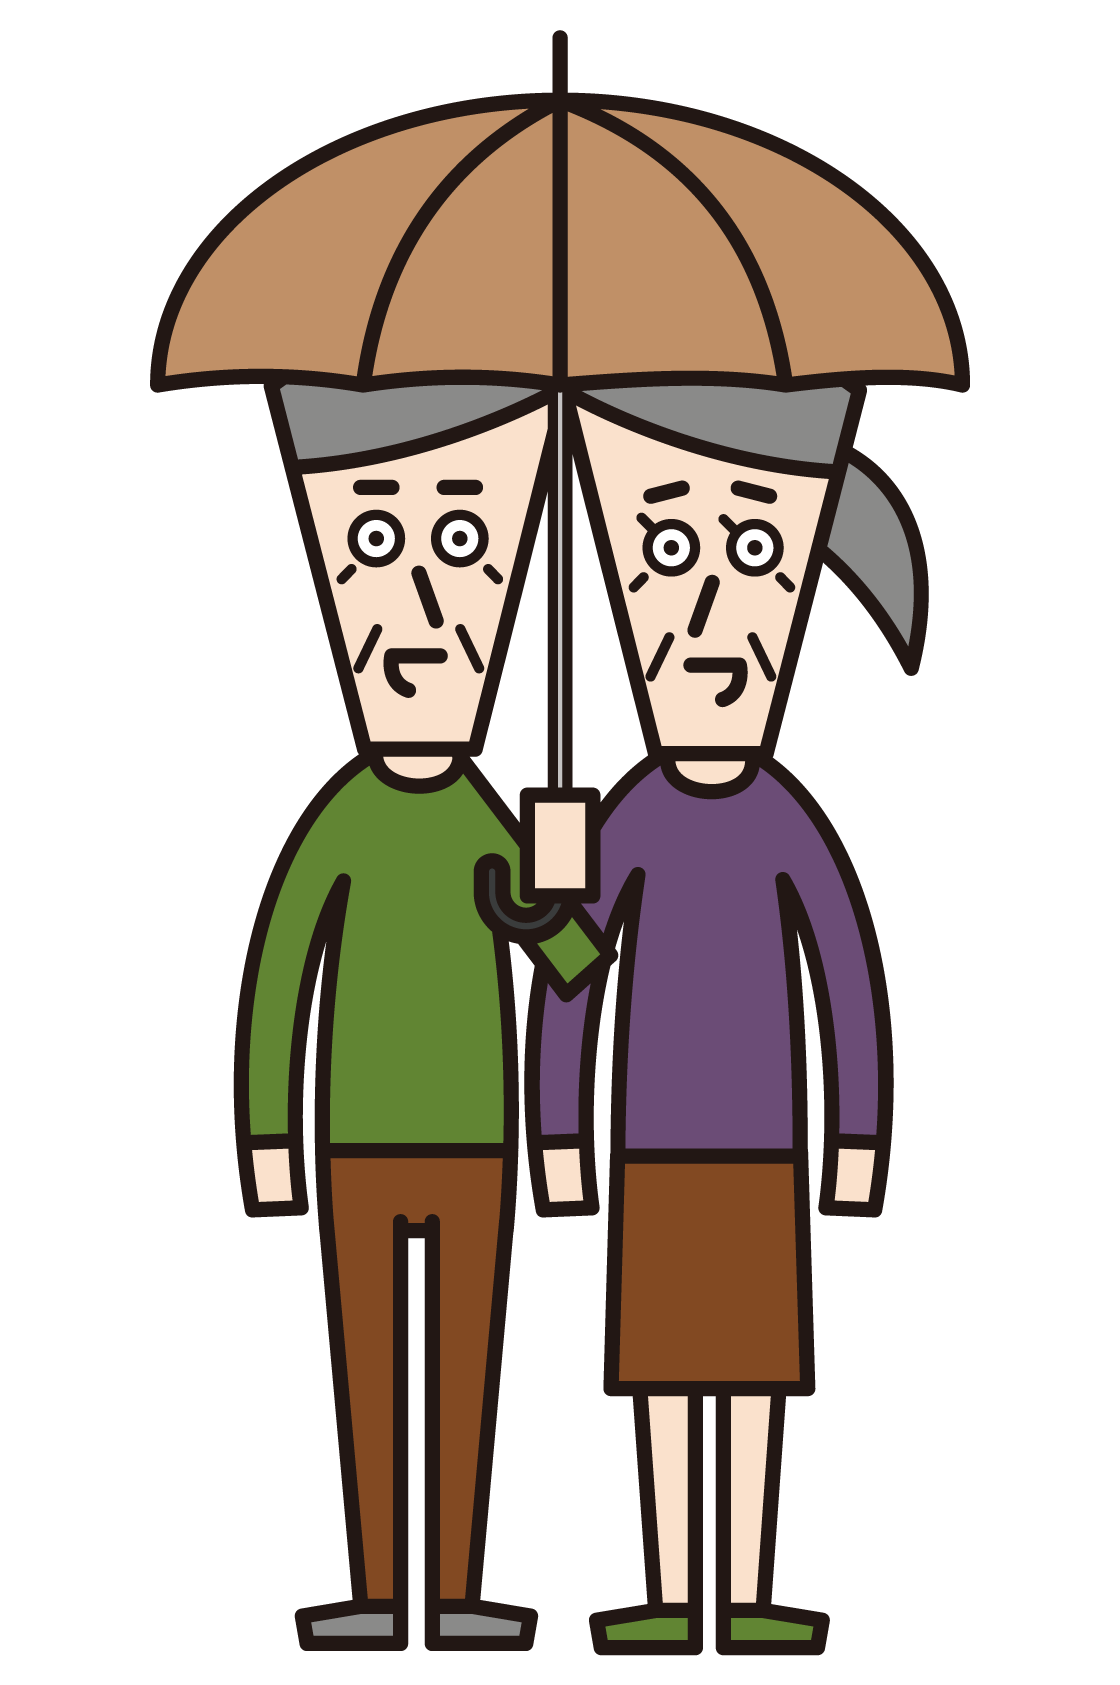 Illustration of an elderly couple holding an umbrella